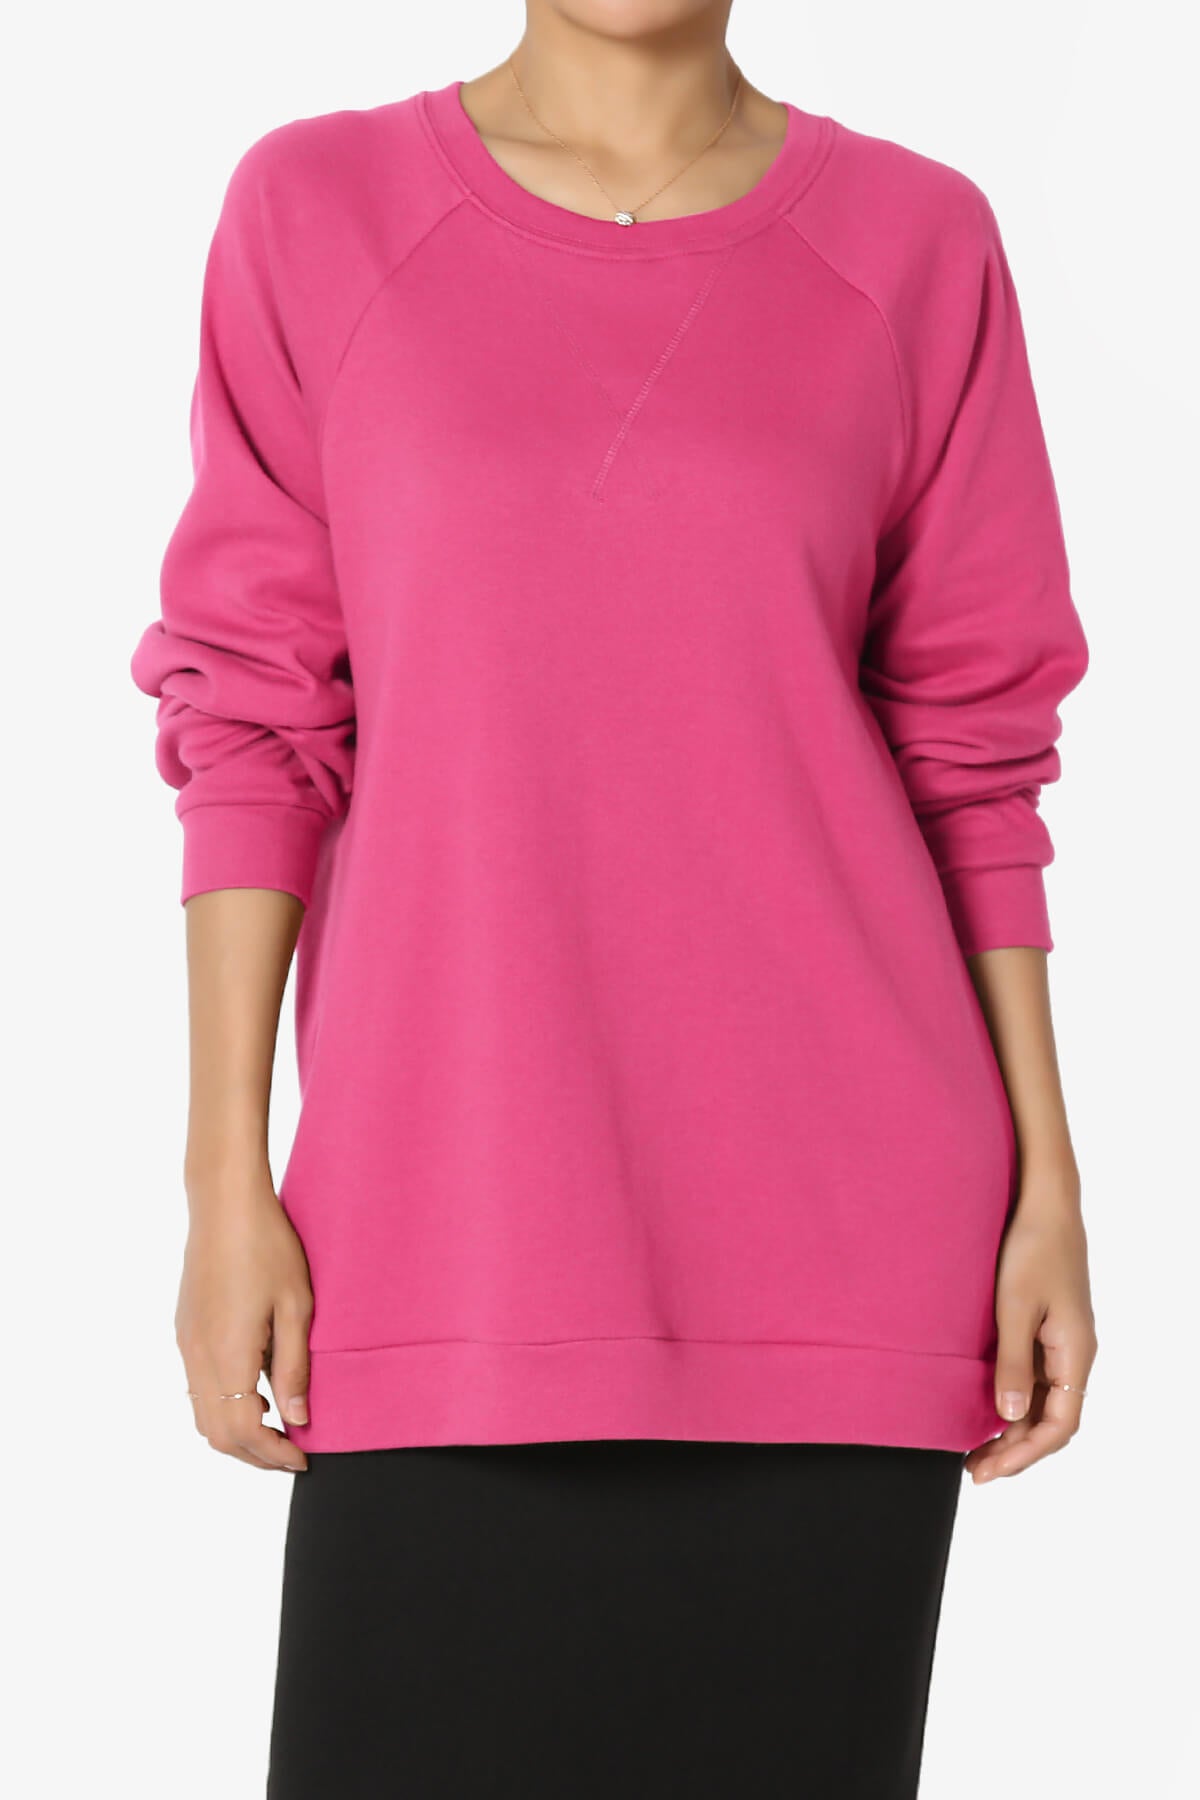 Carlene Cotton Raglan Sleeve Pullover Top HOT PINK_1